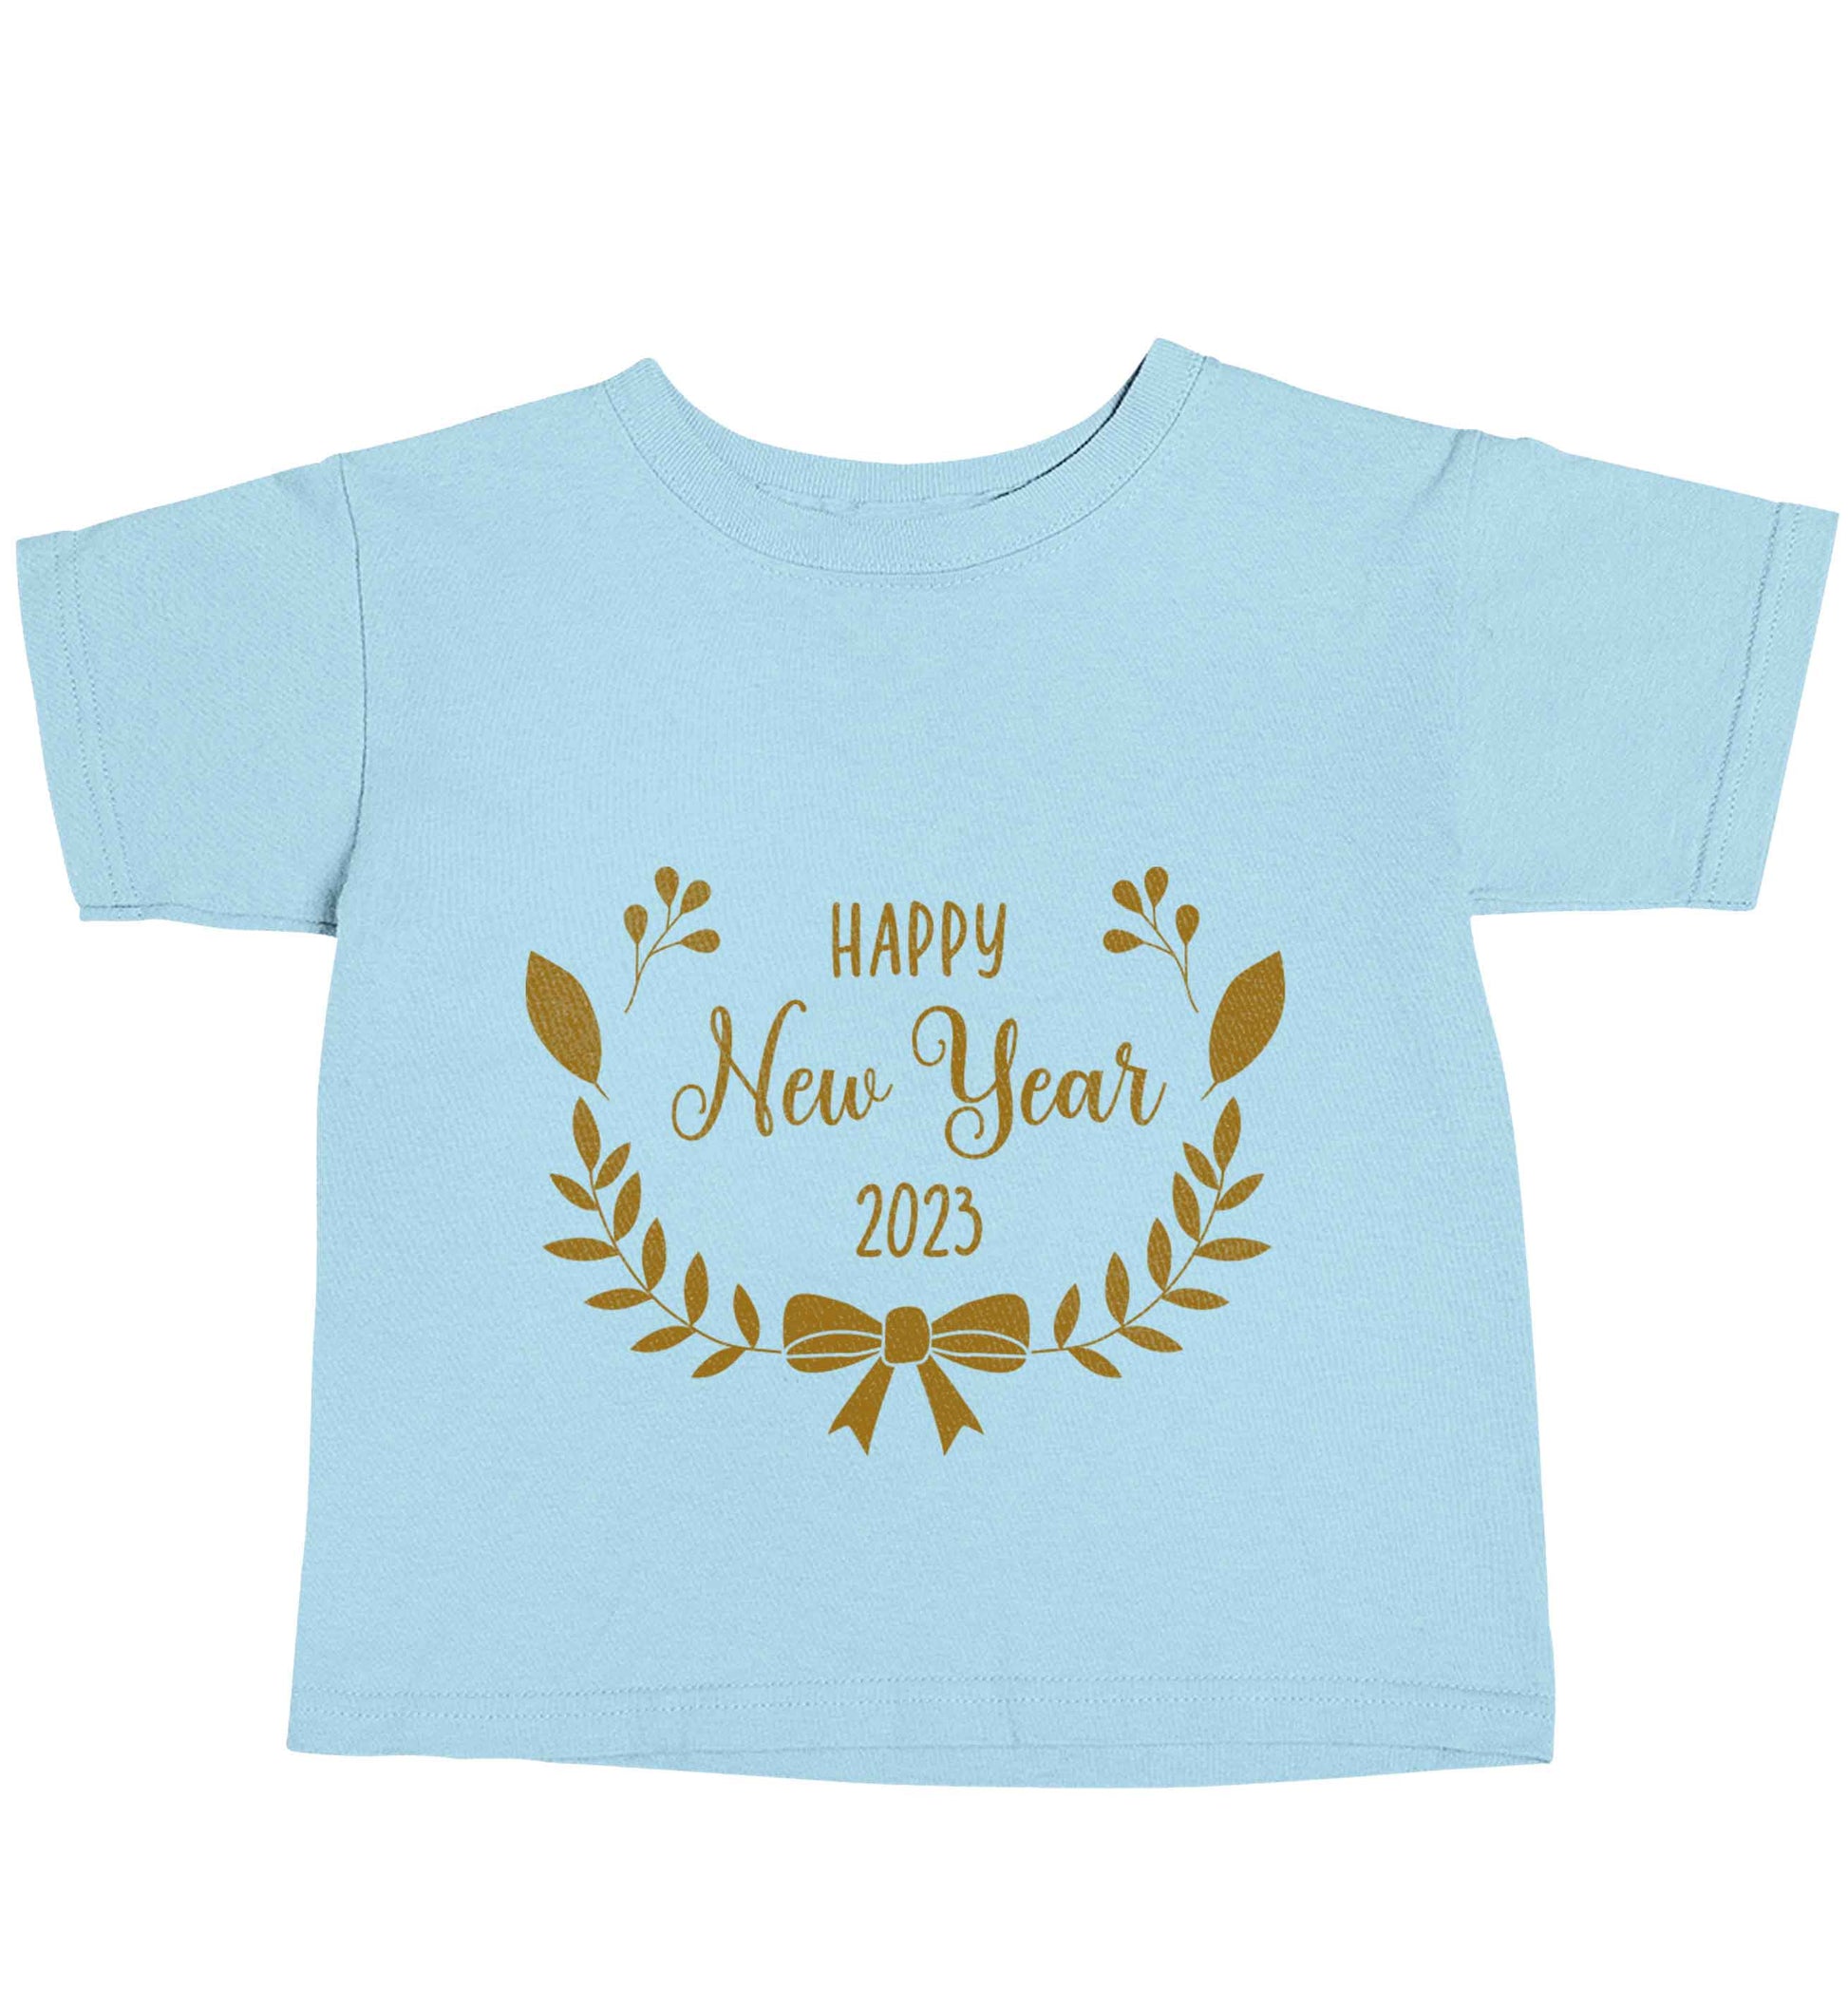 Happy New Year 2023 light blue baby toddler Tshirt 2 Years